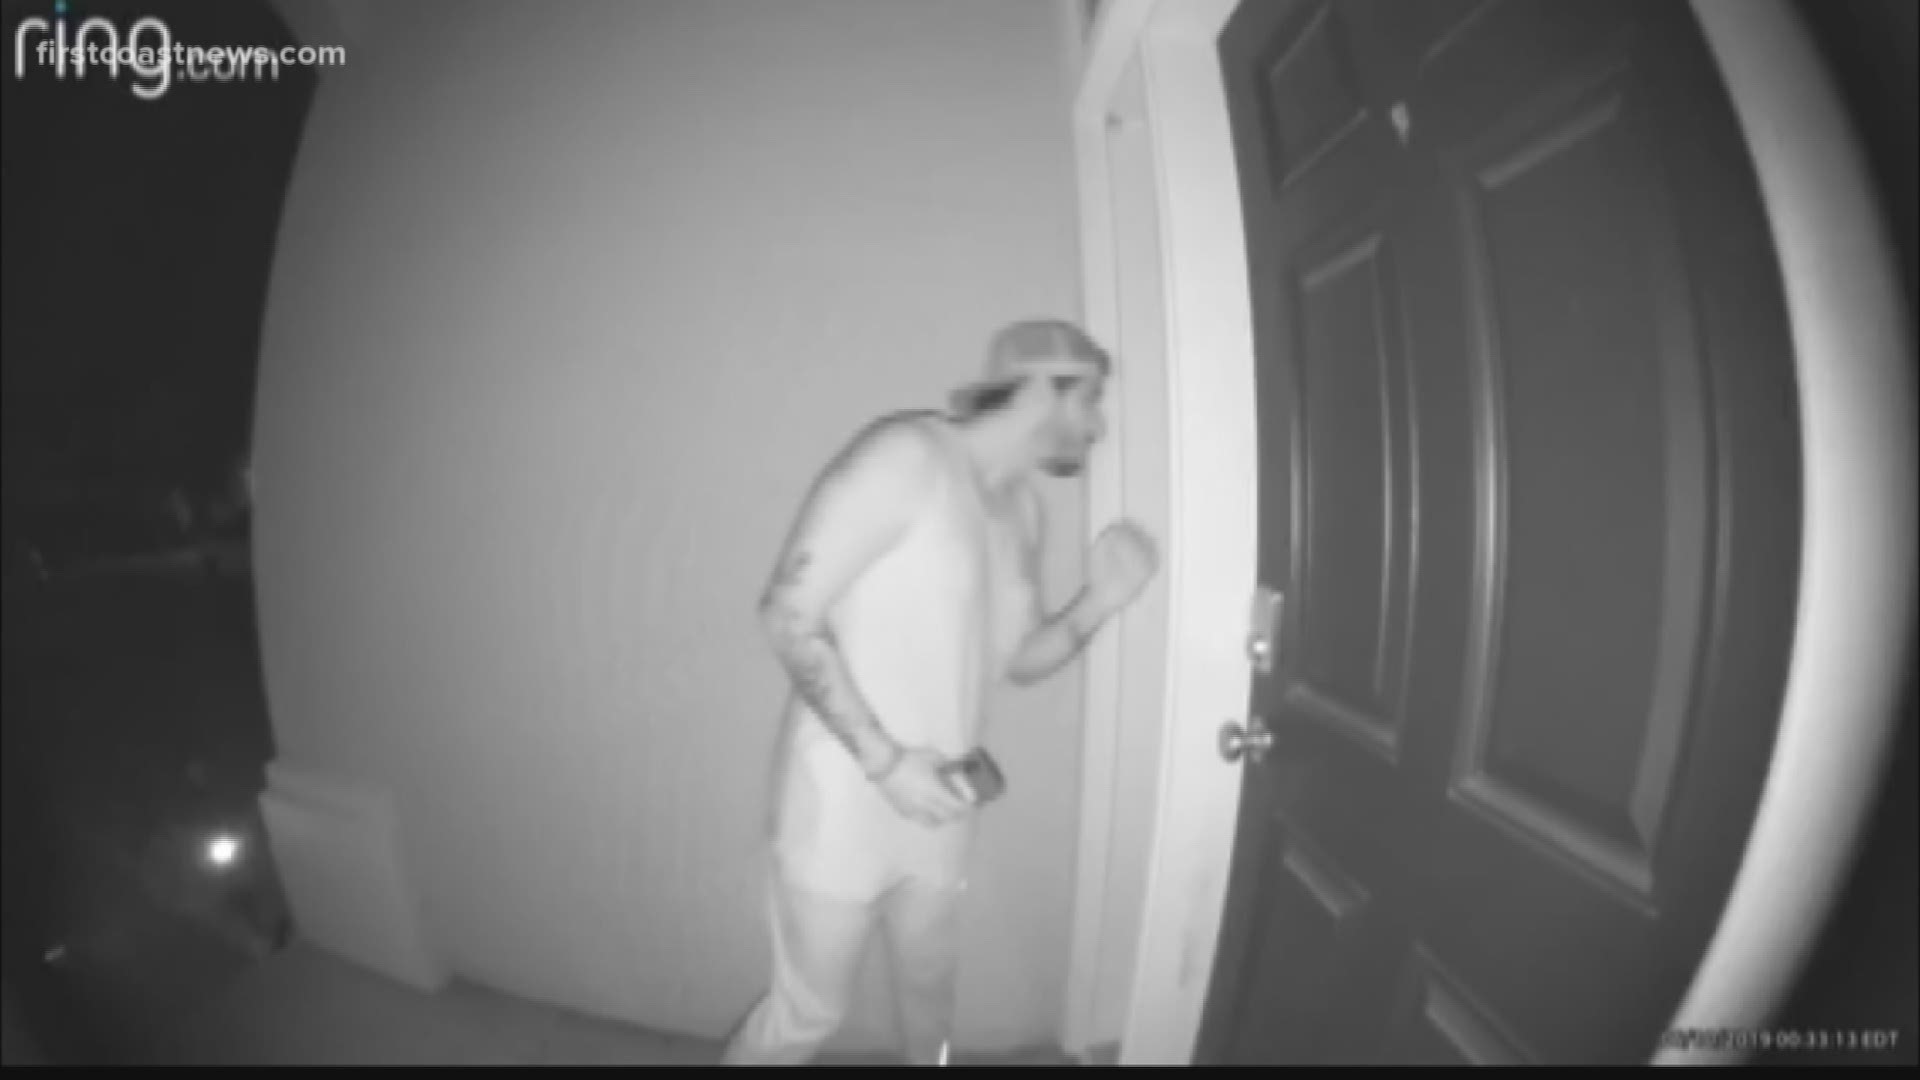 Suspected Peeping Tom Caught On Camera Firstcoastnewscom